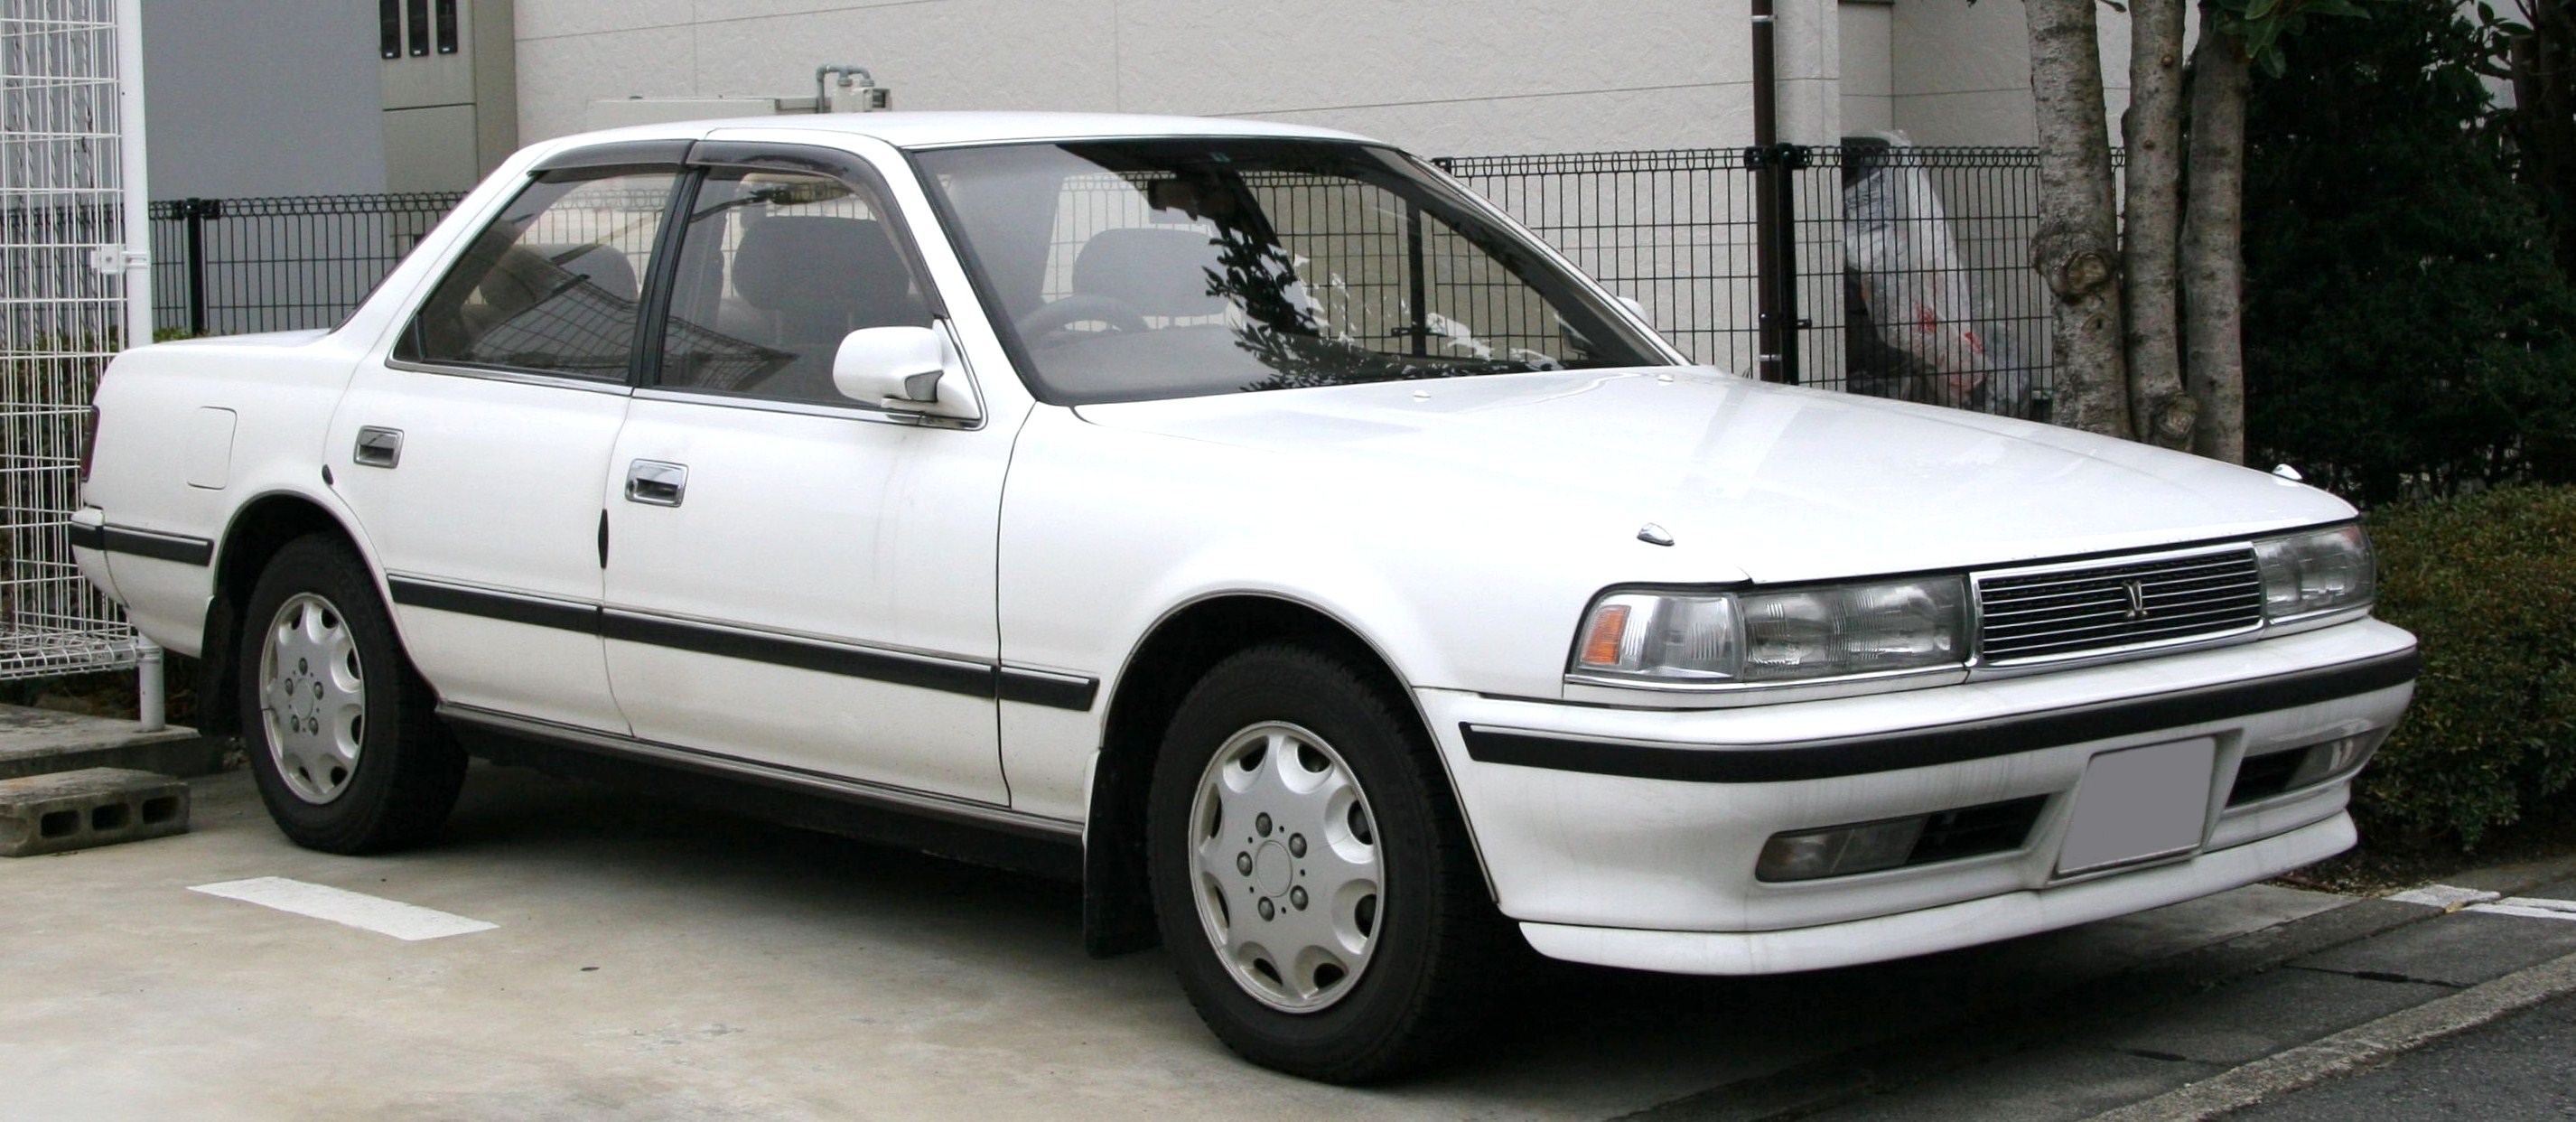 Toyota Cresta III (X80) 1988 - 1990 Sedan #7